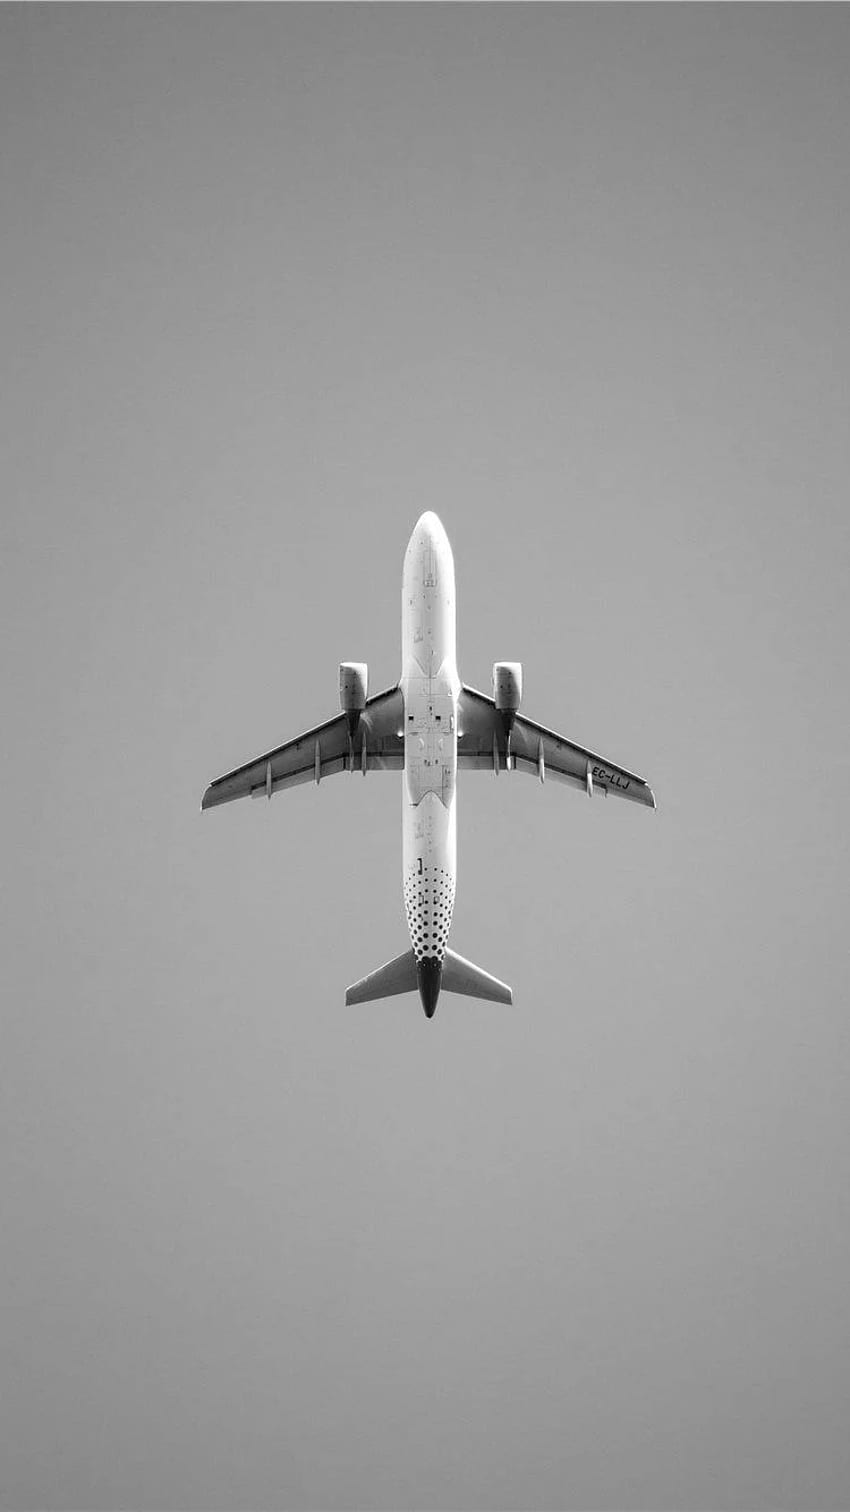 50,000+ Plane Wallpaper Pictures | Download Free Images on Unsplash